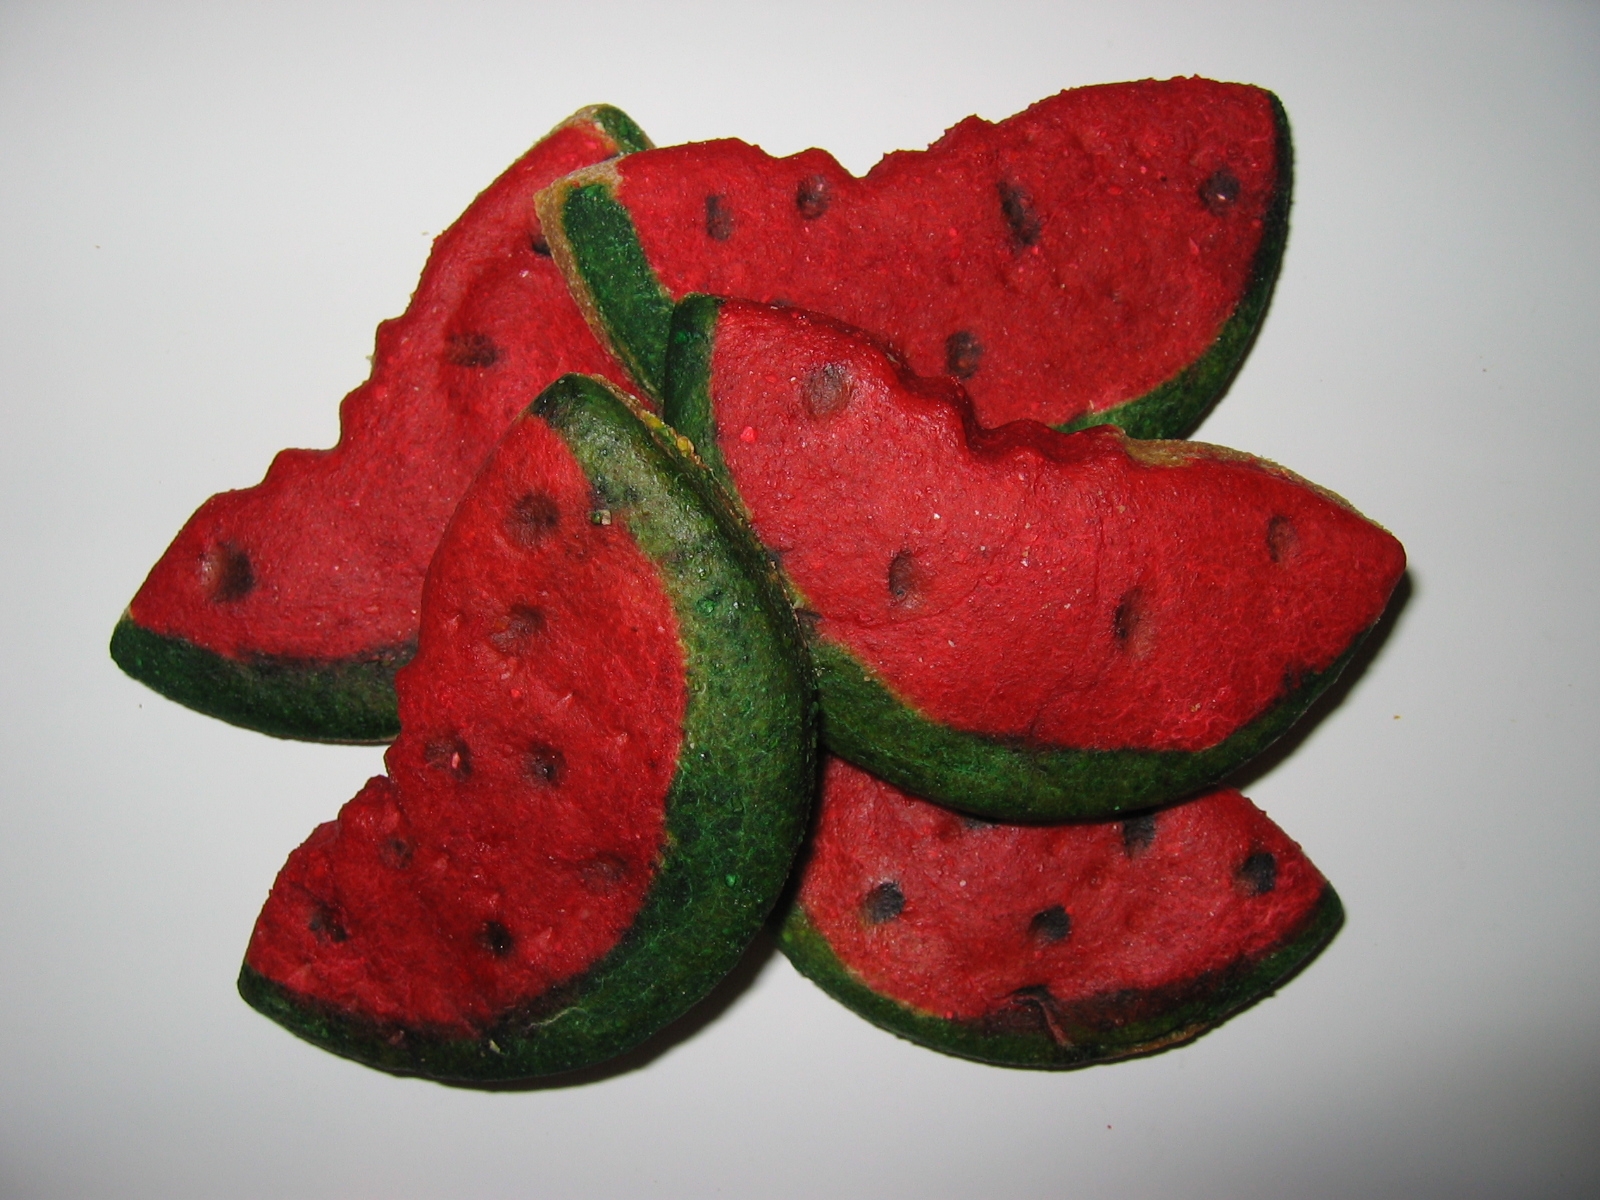 Summer Melon Image